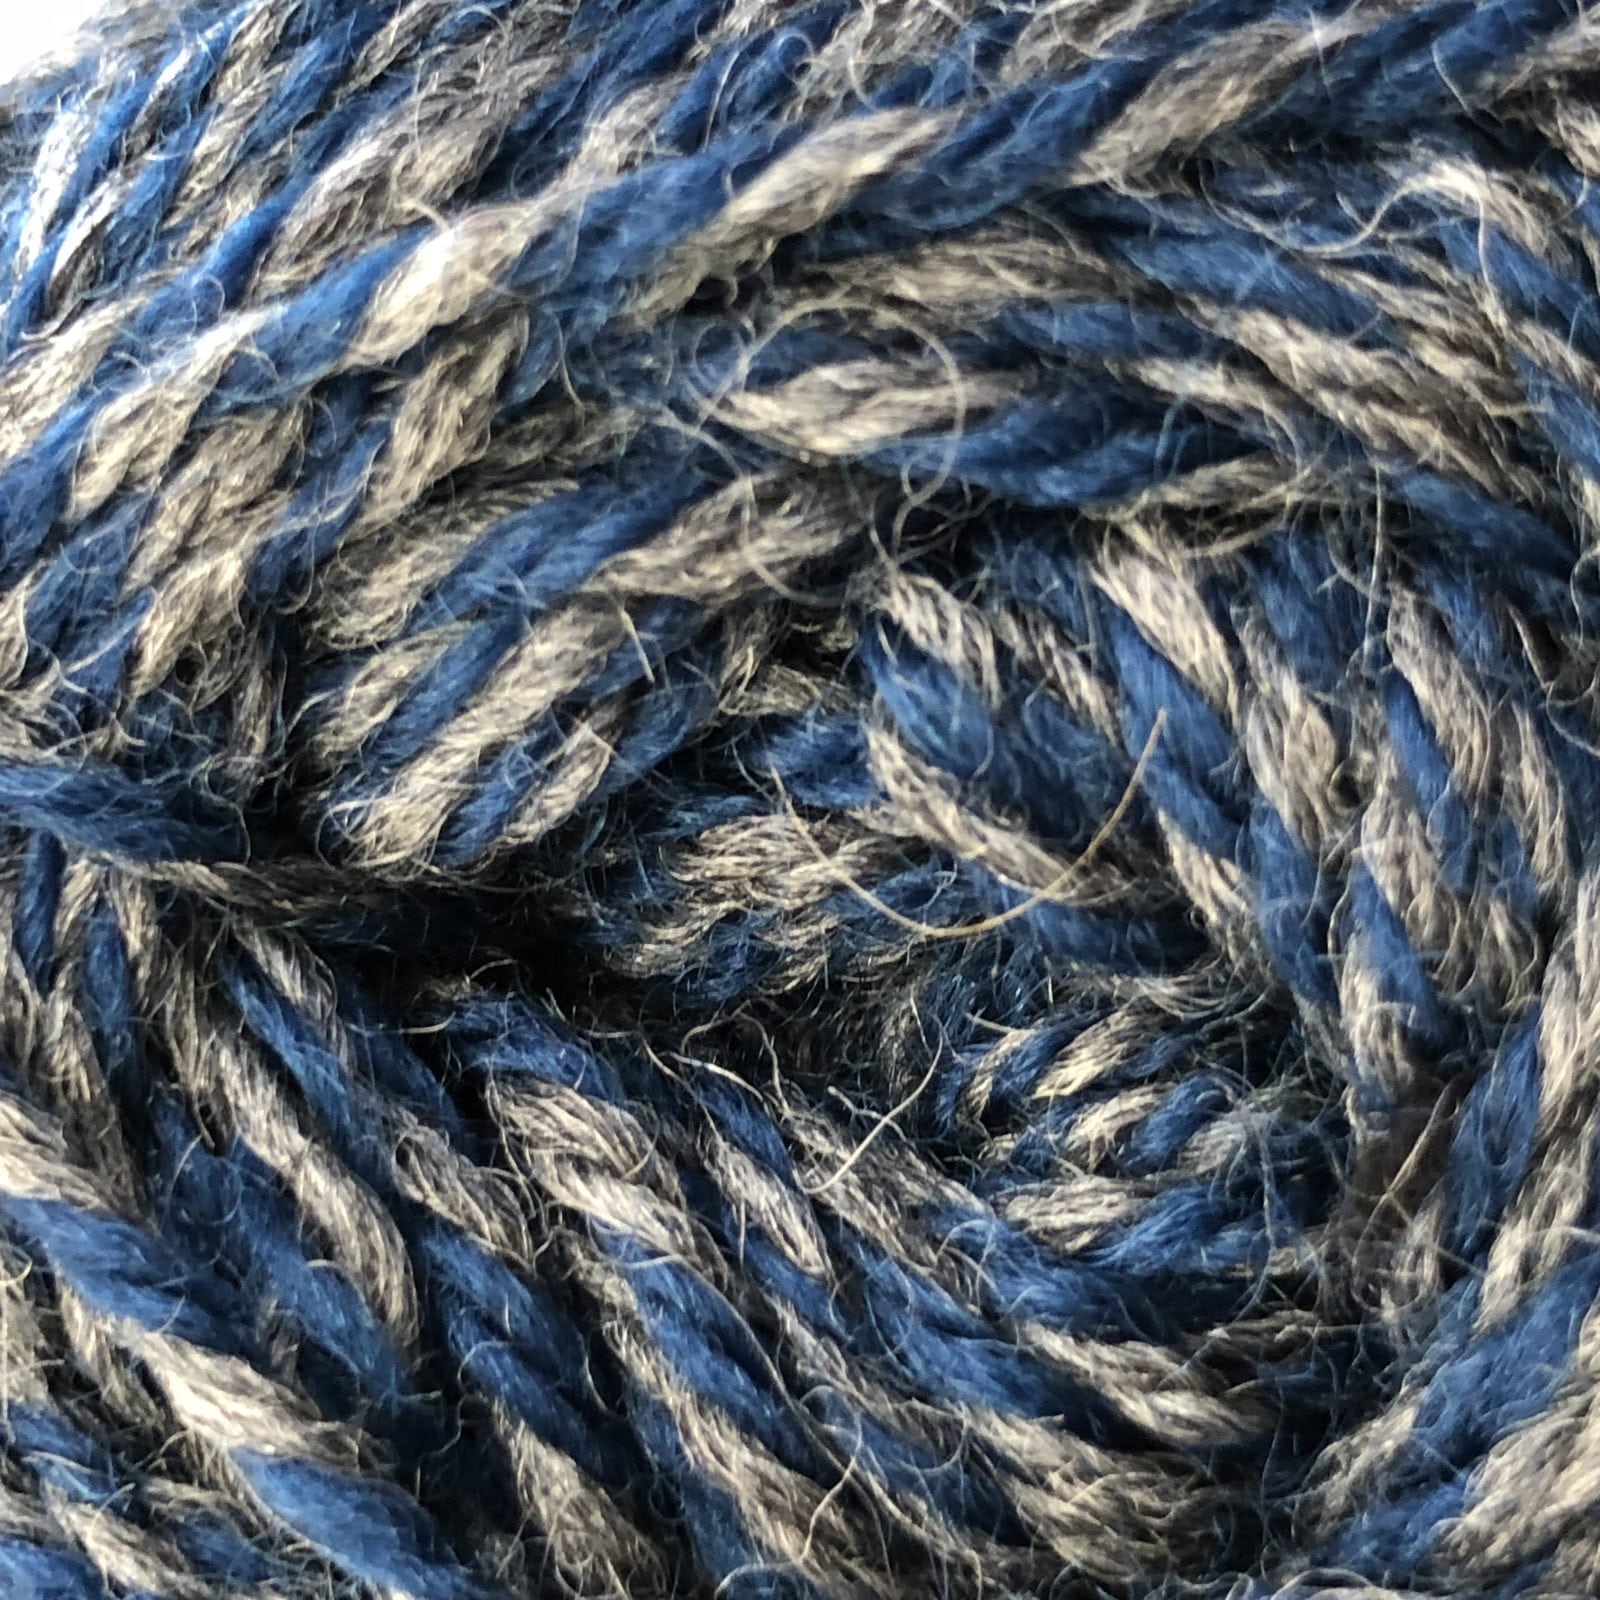 Countrywide Windsor 100% New Zealand wool yarn 8ply Marl Marled 8 ply double knit dk Petrol - Grey Shade 3870